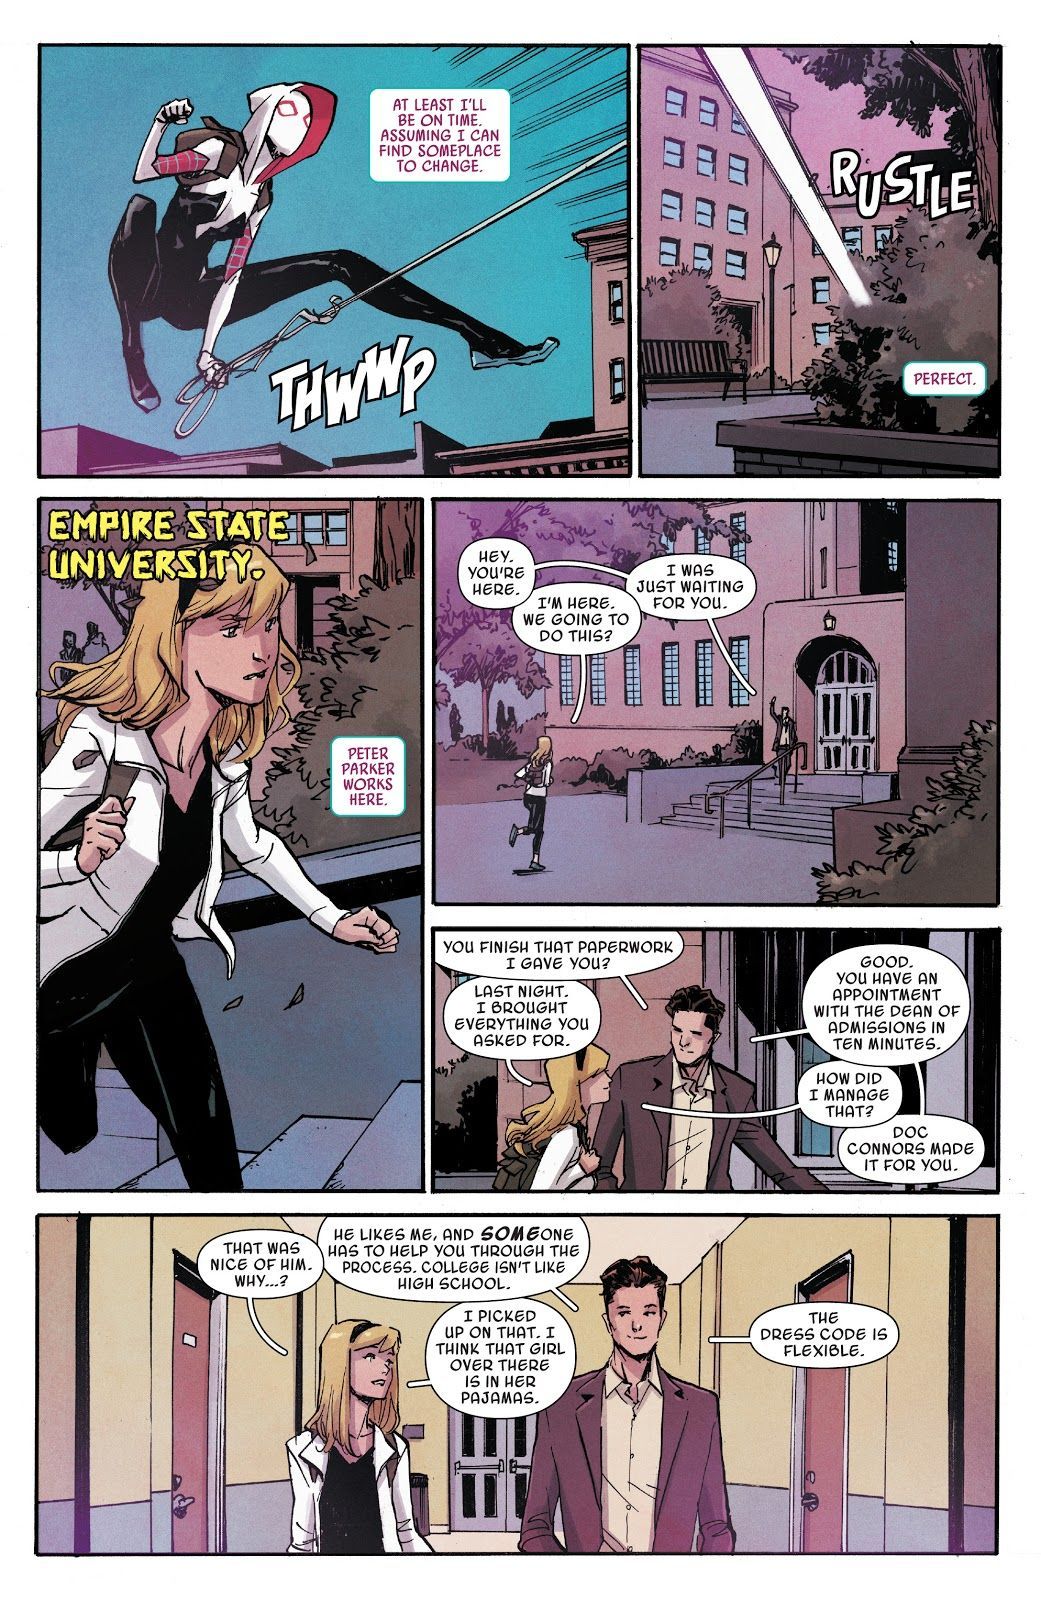 L’amistat anormal, però totalment adorable, Peter Parker / Gwen Stacy